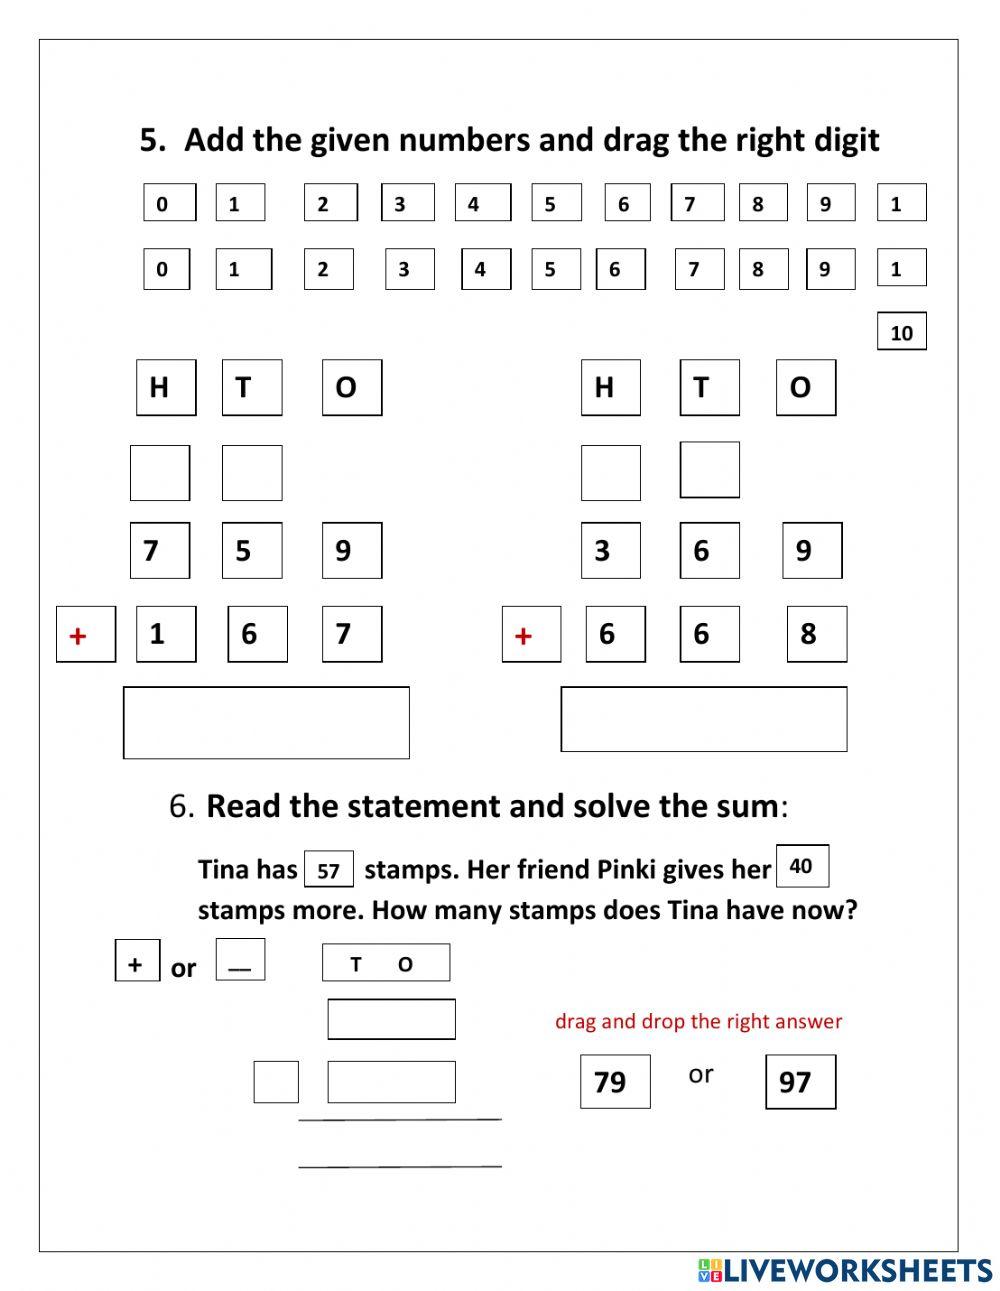 Worksheet of math